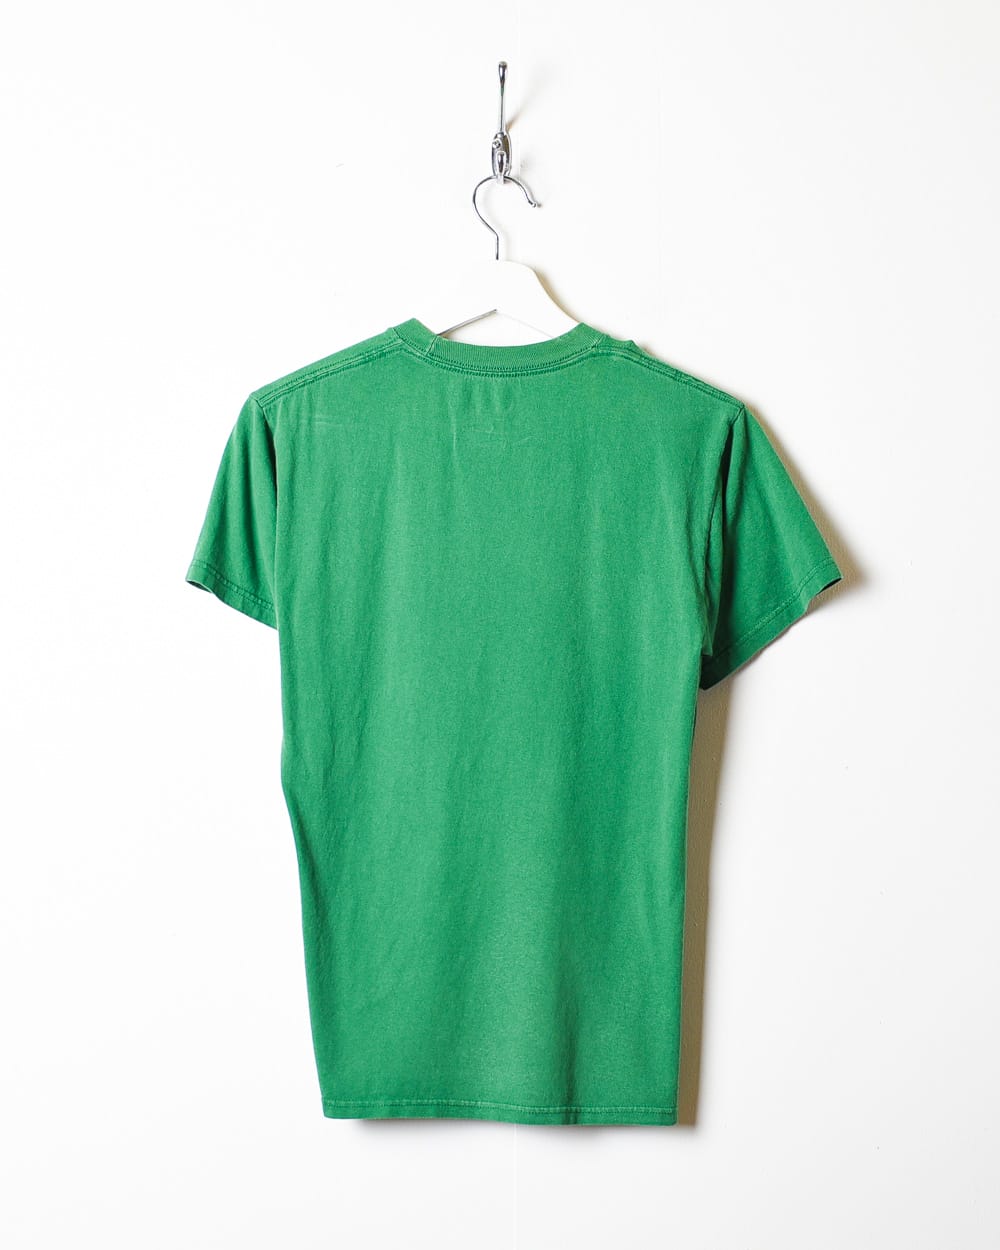 Green NBA Boston Celtics T-Shirt - X-Small